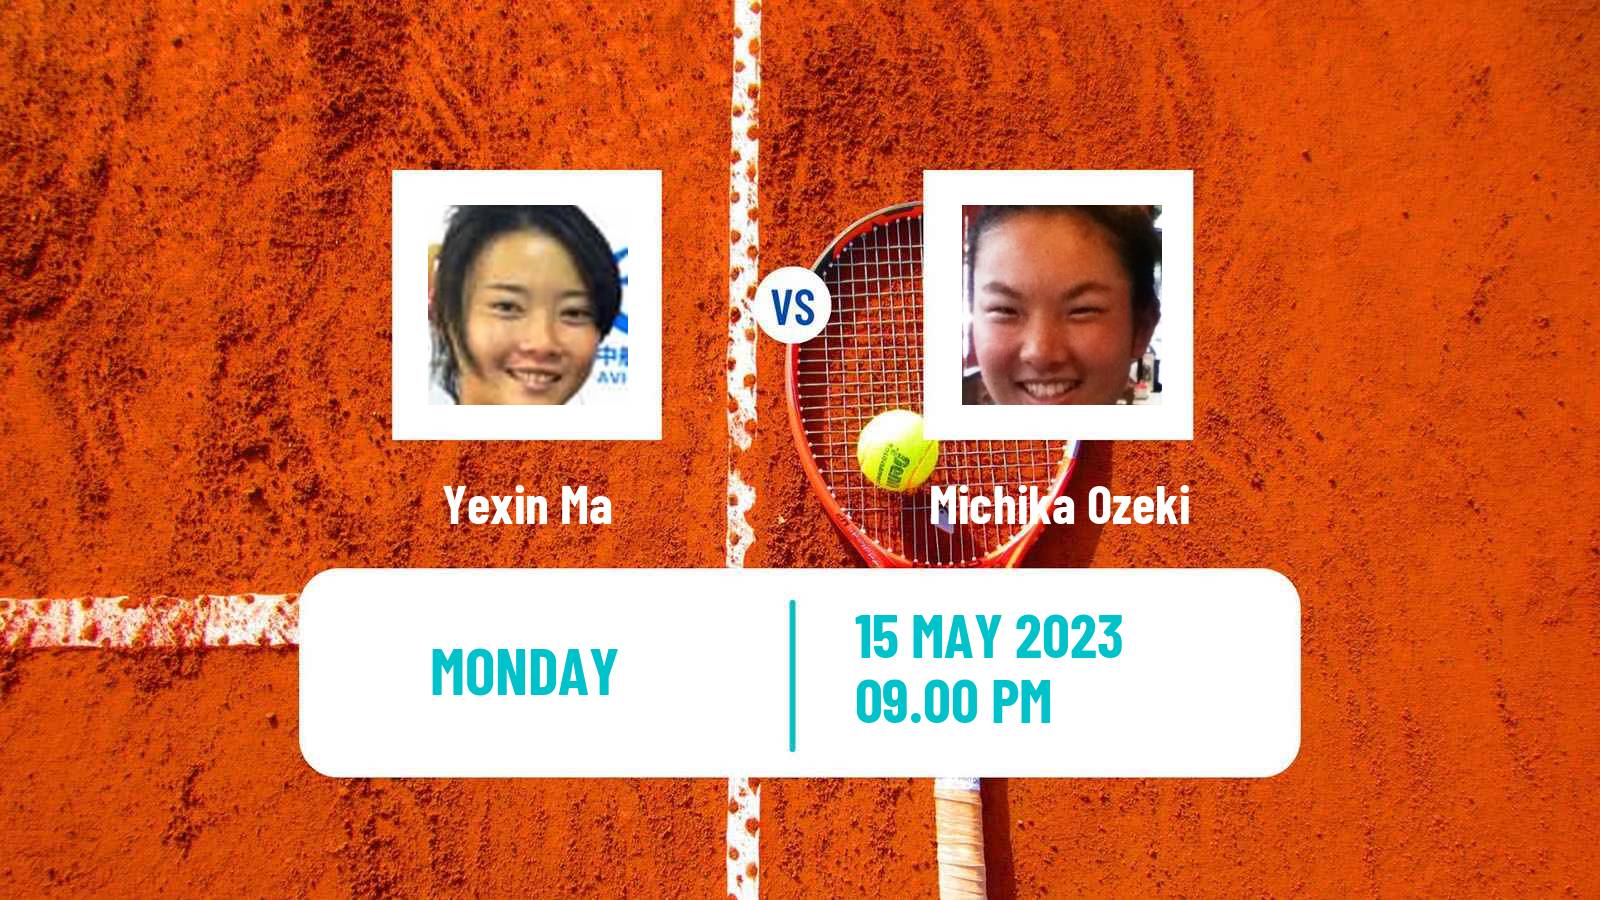 Tennis ITF Tournaments Yexin Ma - Michika Ozeki